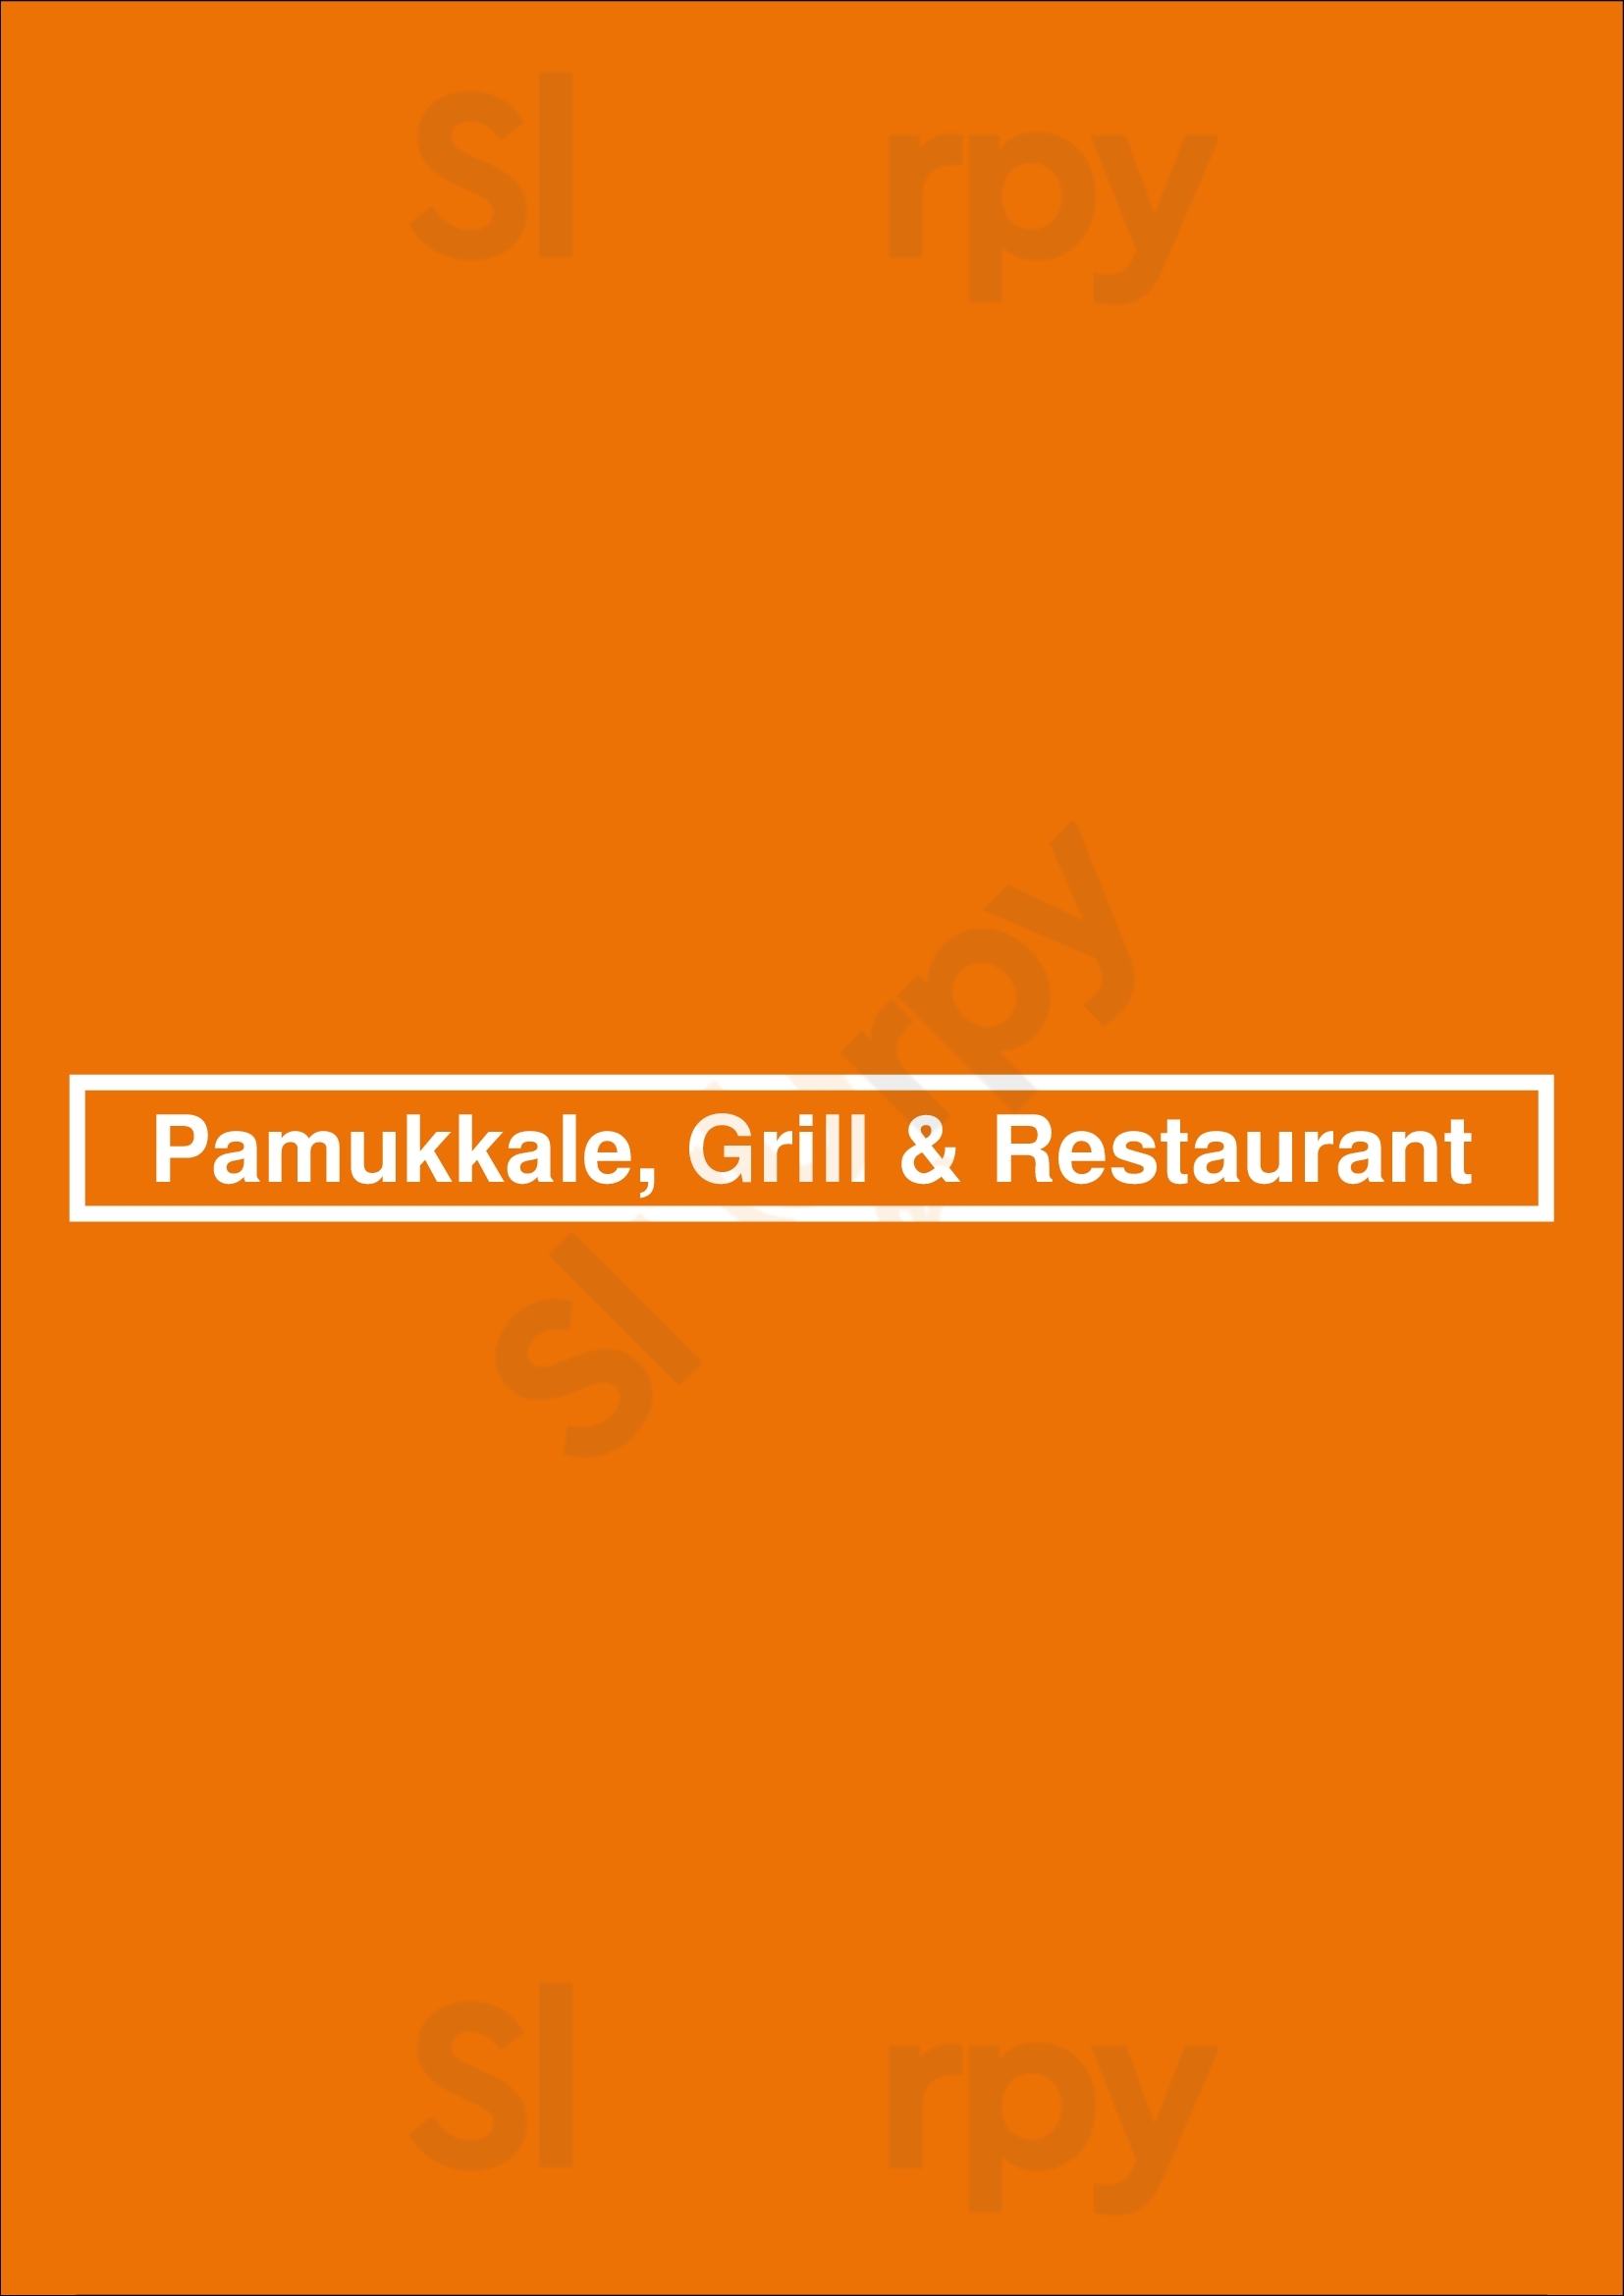 Pamukkale, Grill & Restaurant Hamburg Menu - 1